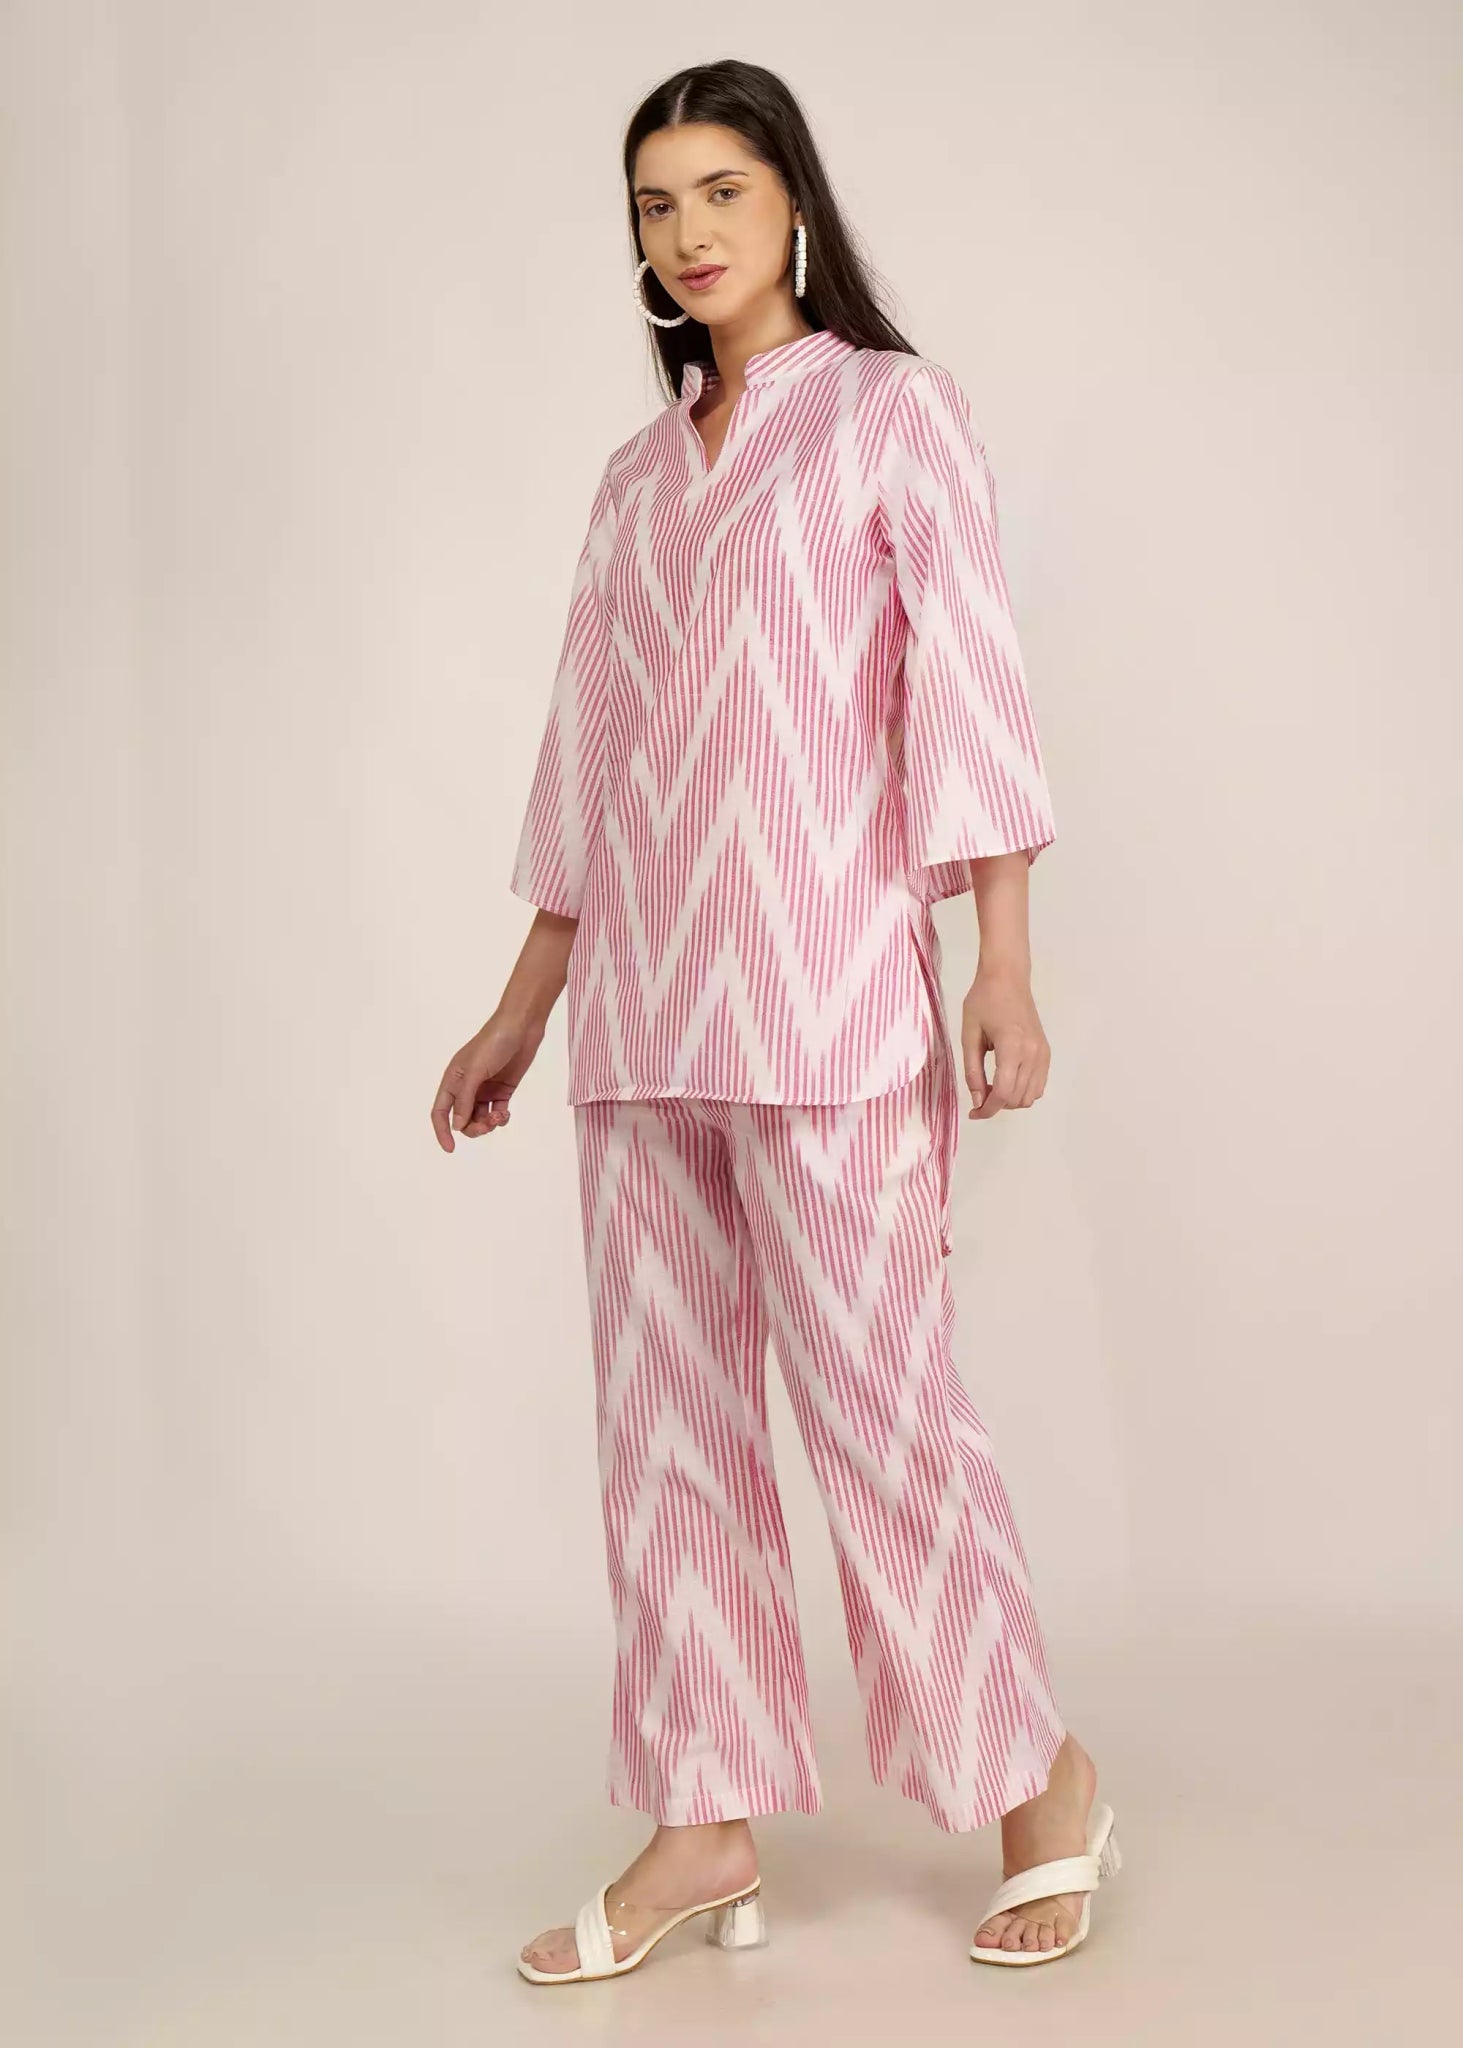 Women Pink & White Cotton Blend Ikat Printed Co-ord Set - GargiStyle